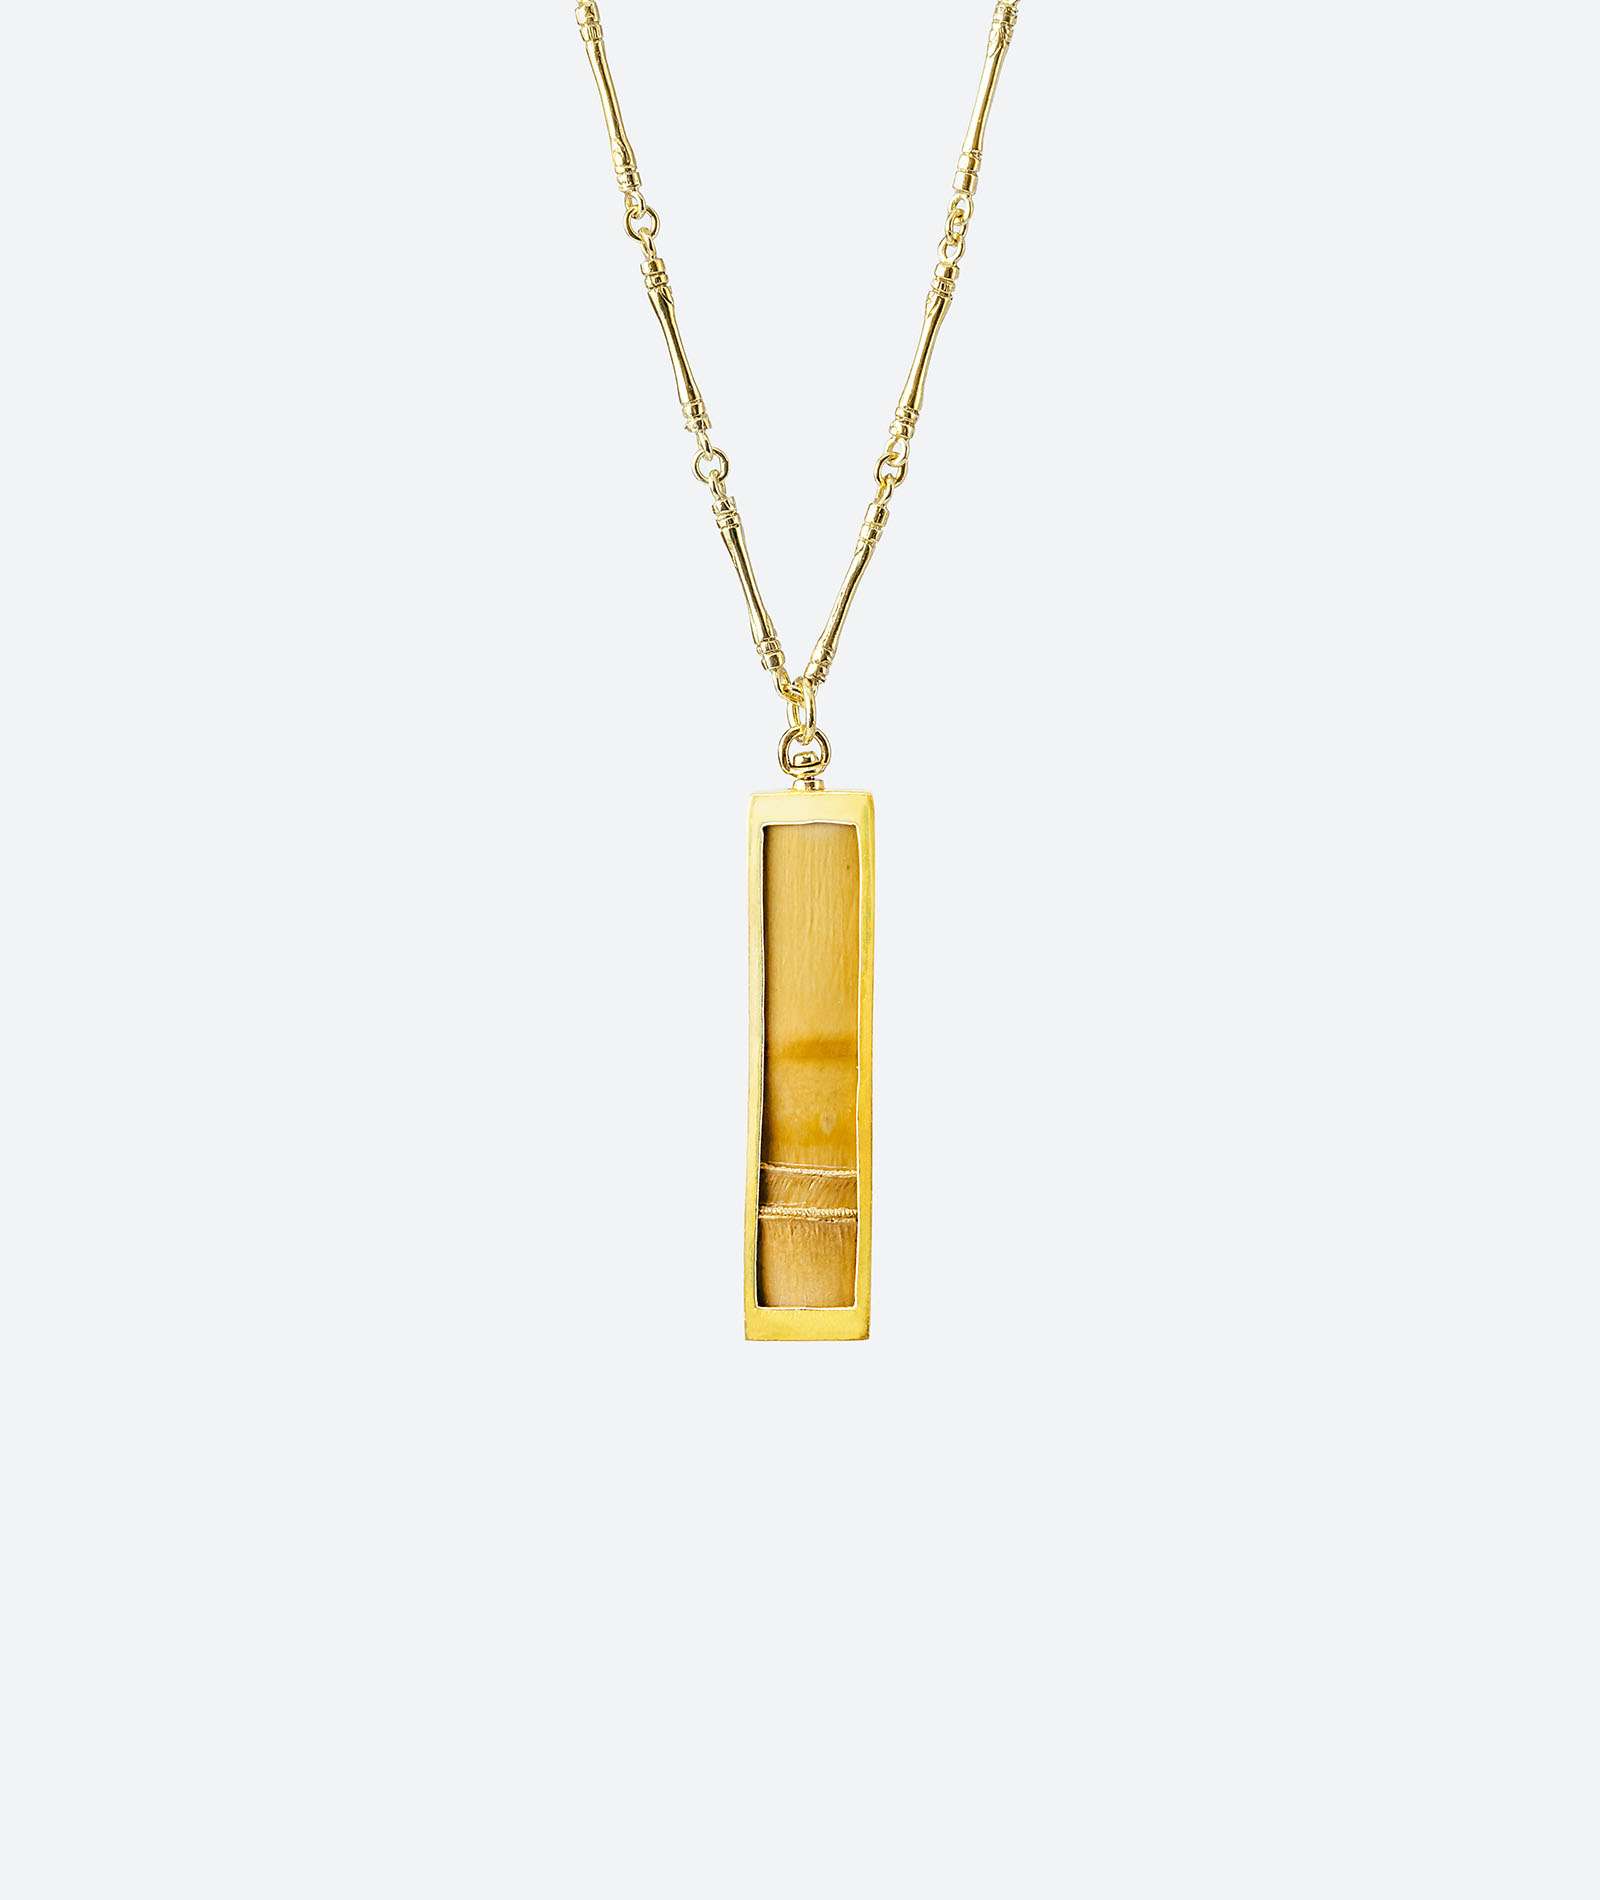 Pablo Luna Jewelry Hutan GugurI Gold Yellow 1